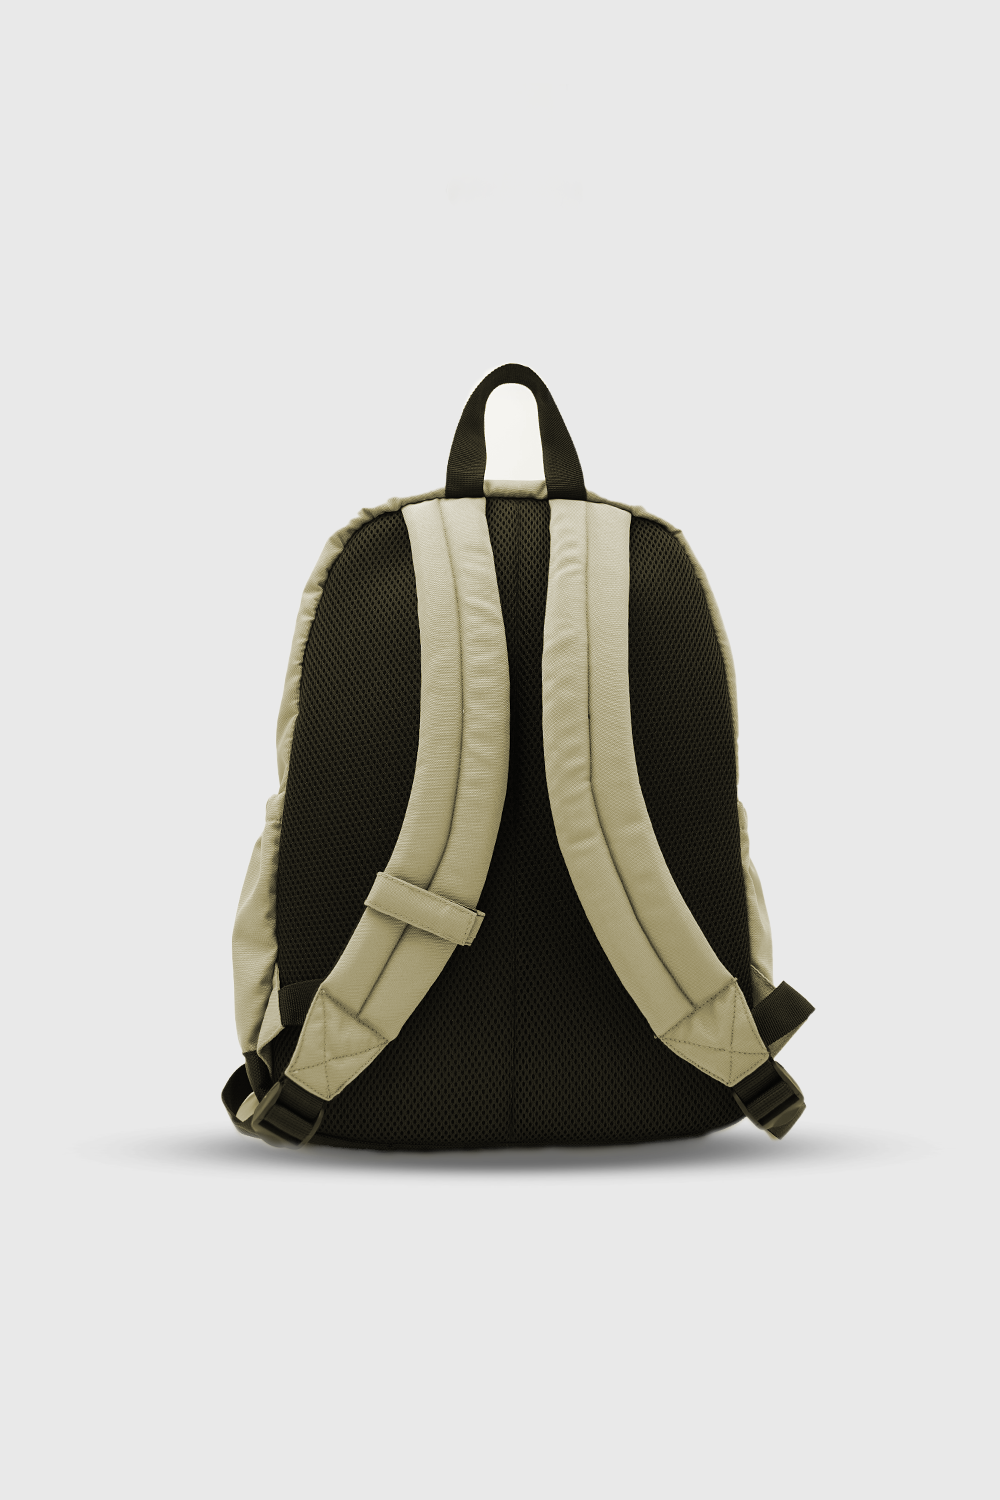 Zalmi Markhor Laptop Backpack